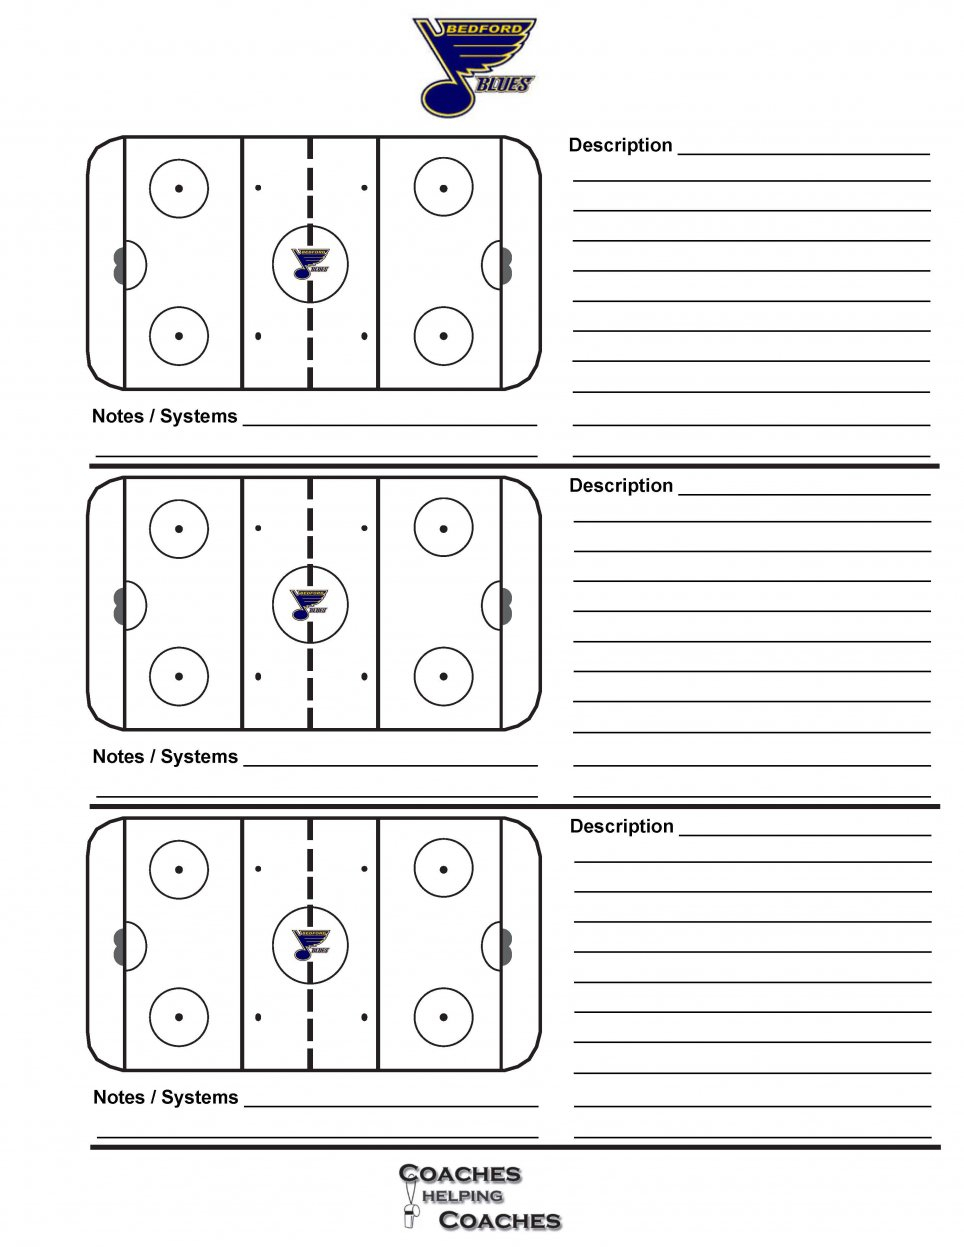 Bedford Minor Hockey Association Hockey Poweredgoalline.ca Intended For Blank Hockey Practice Plan Template